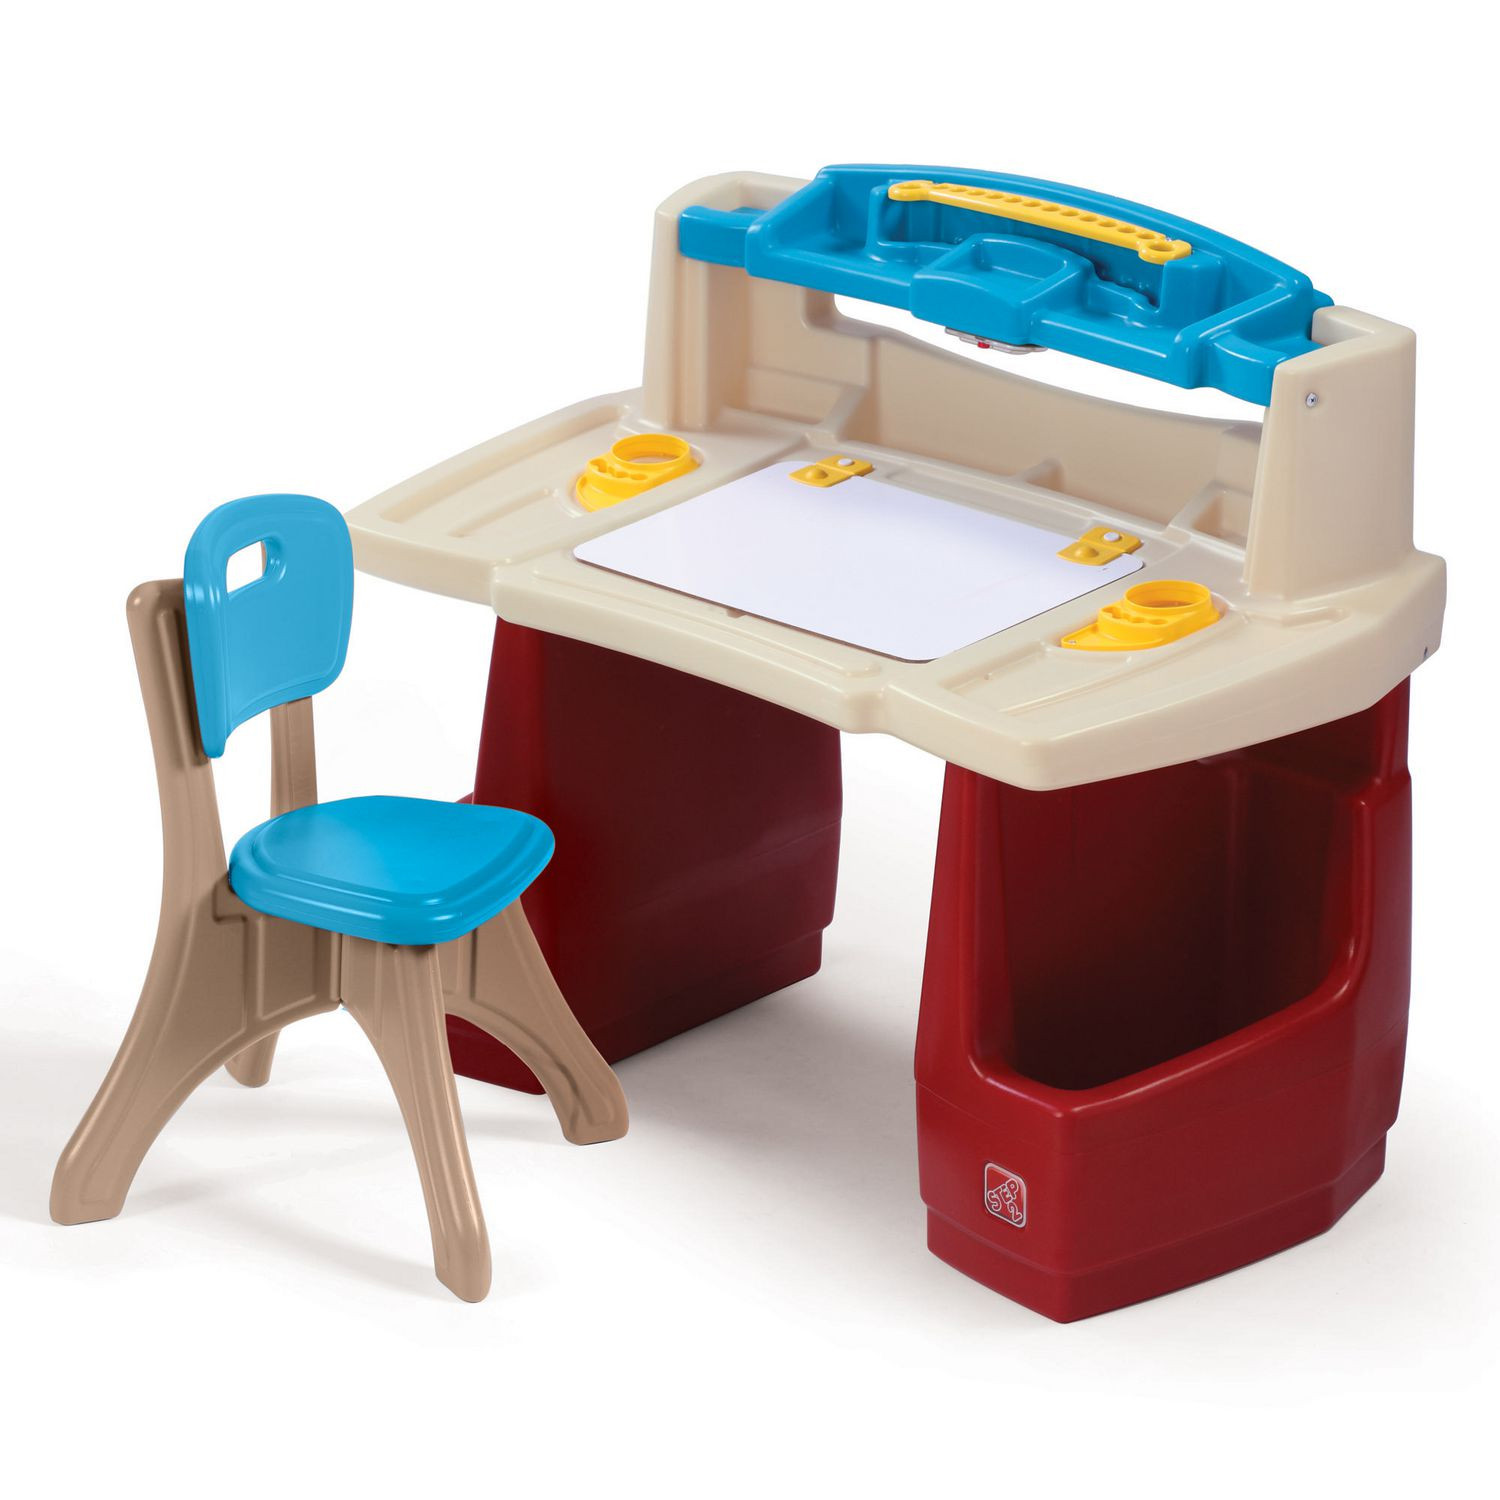 Kids Art Desk With Storage
 Step2 Deluxe Art Master Desk Kids Art Table with Storage